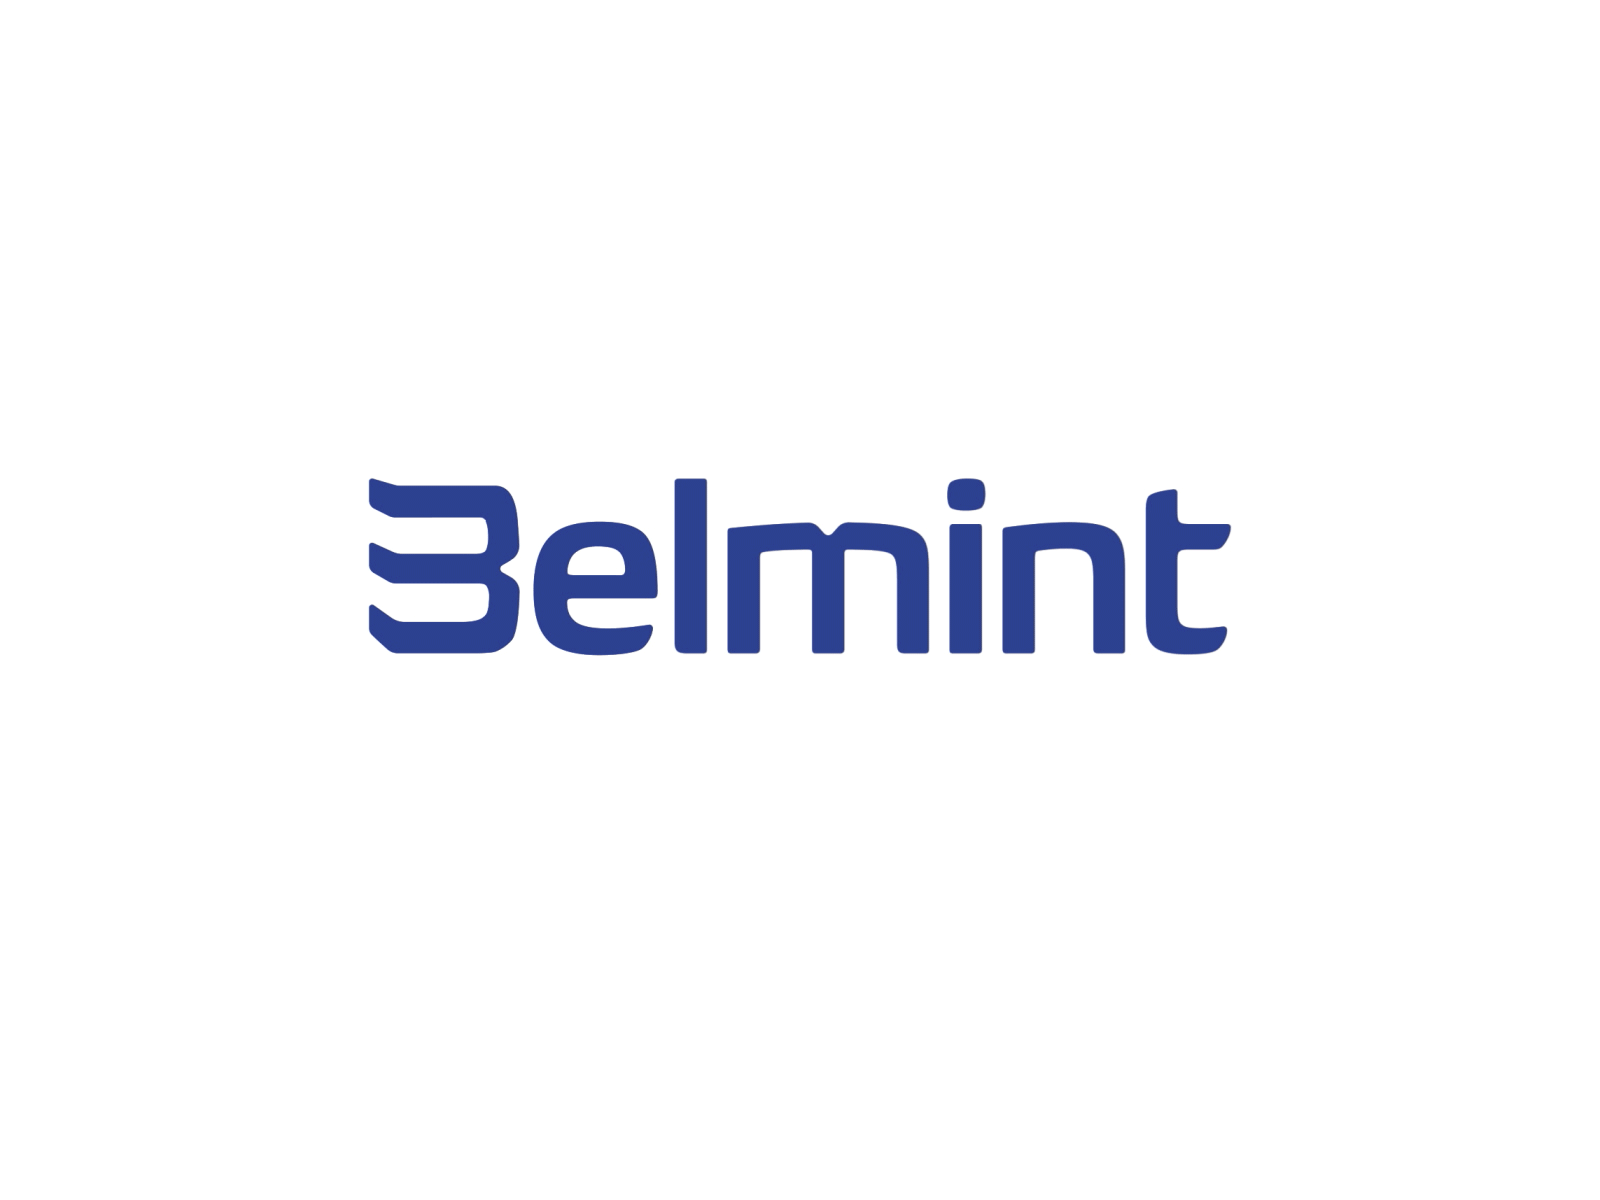 Belmint logo animation